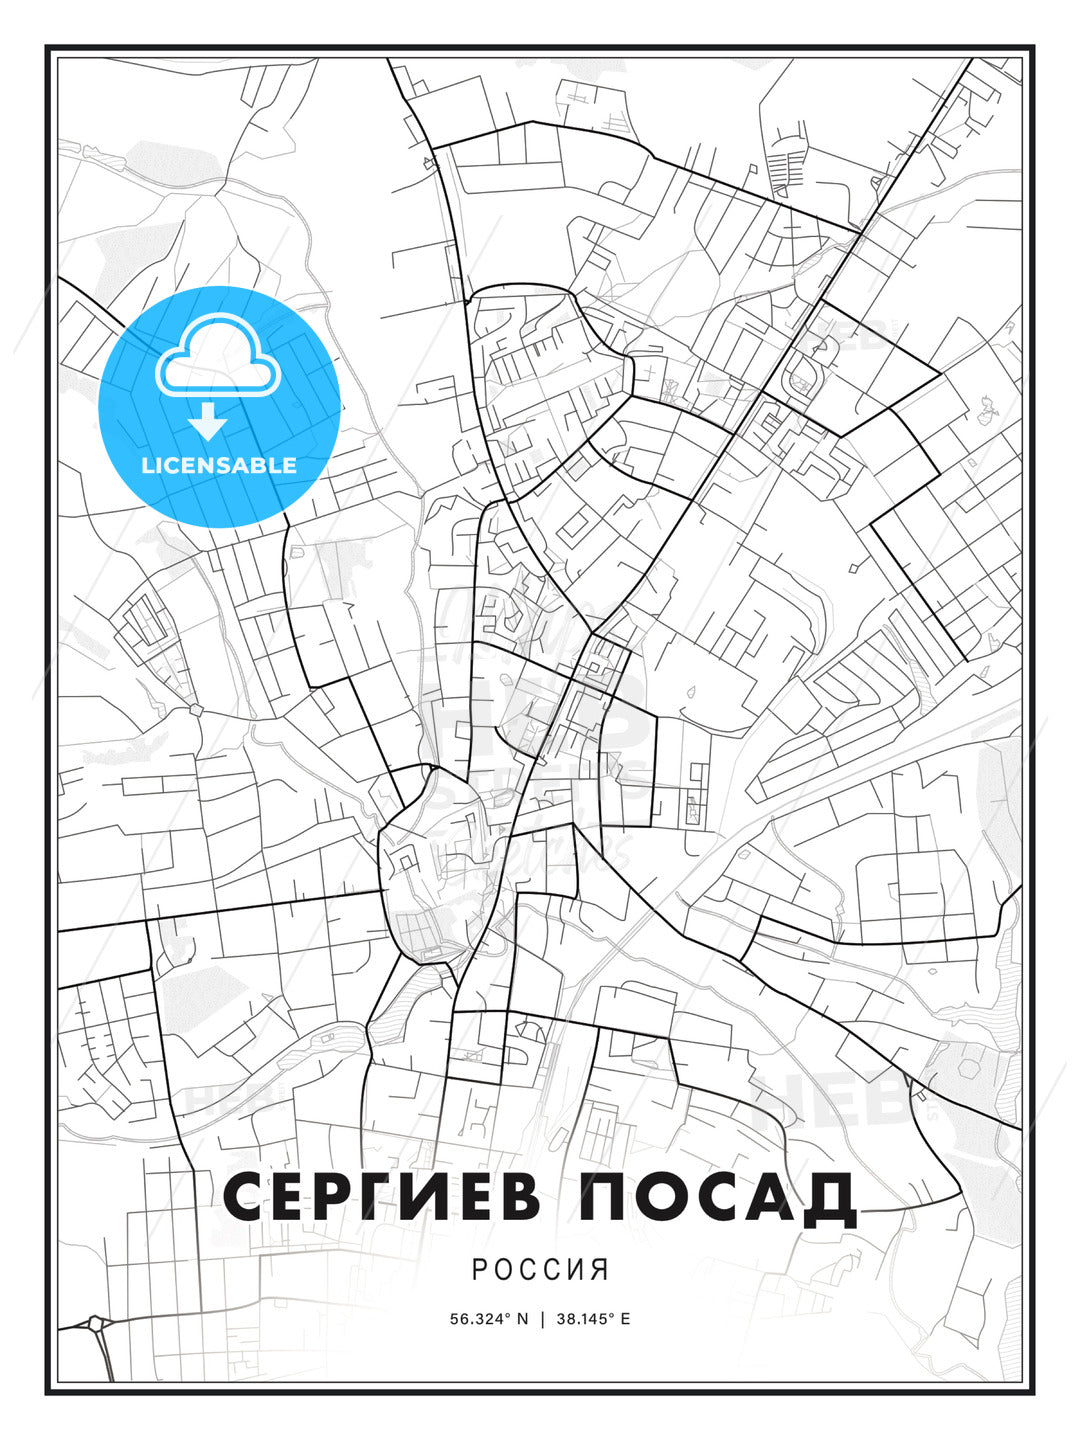 СЕРГИЕВ ПОСАД / Sergiyev Posad, Russia, Modern Print Template in Various Formats - HEBSTREITS Sketches